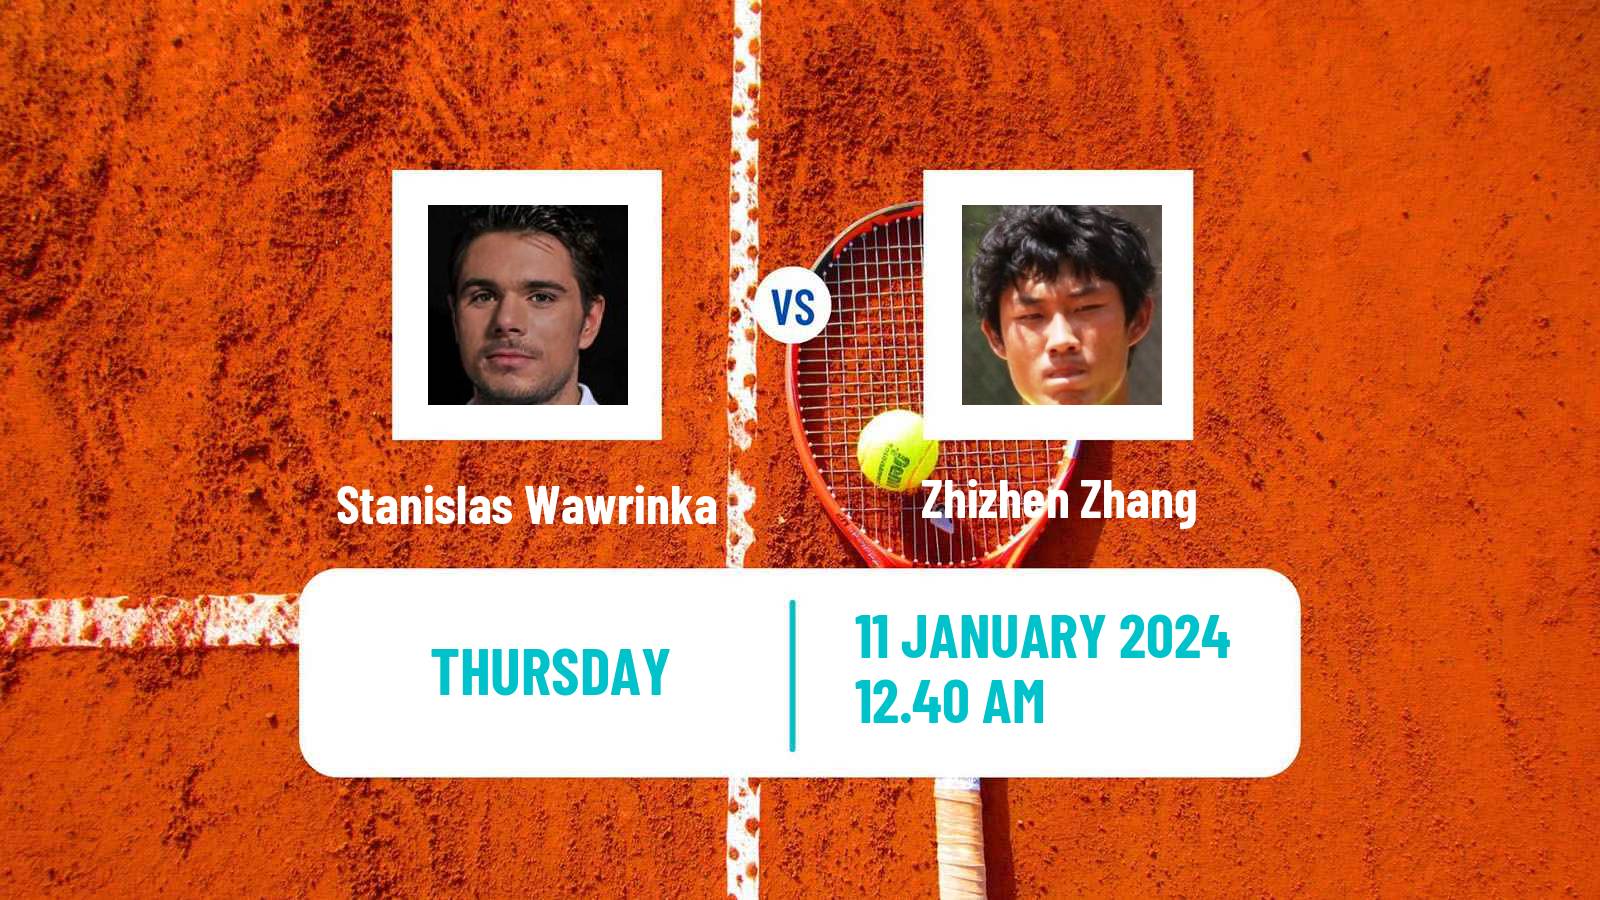 Tennis Exhibition Others Matches Tennis Men Stanislas Wawrinka - Zhizhen Zhang